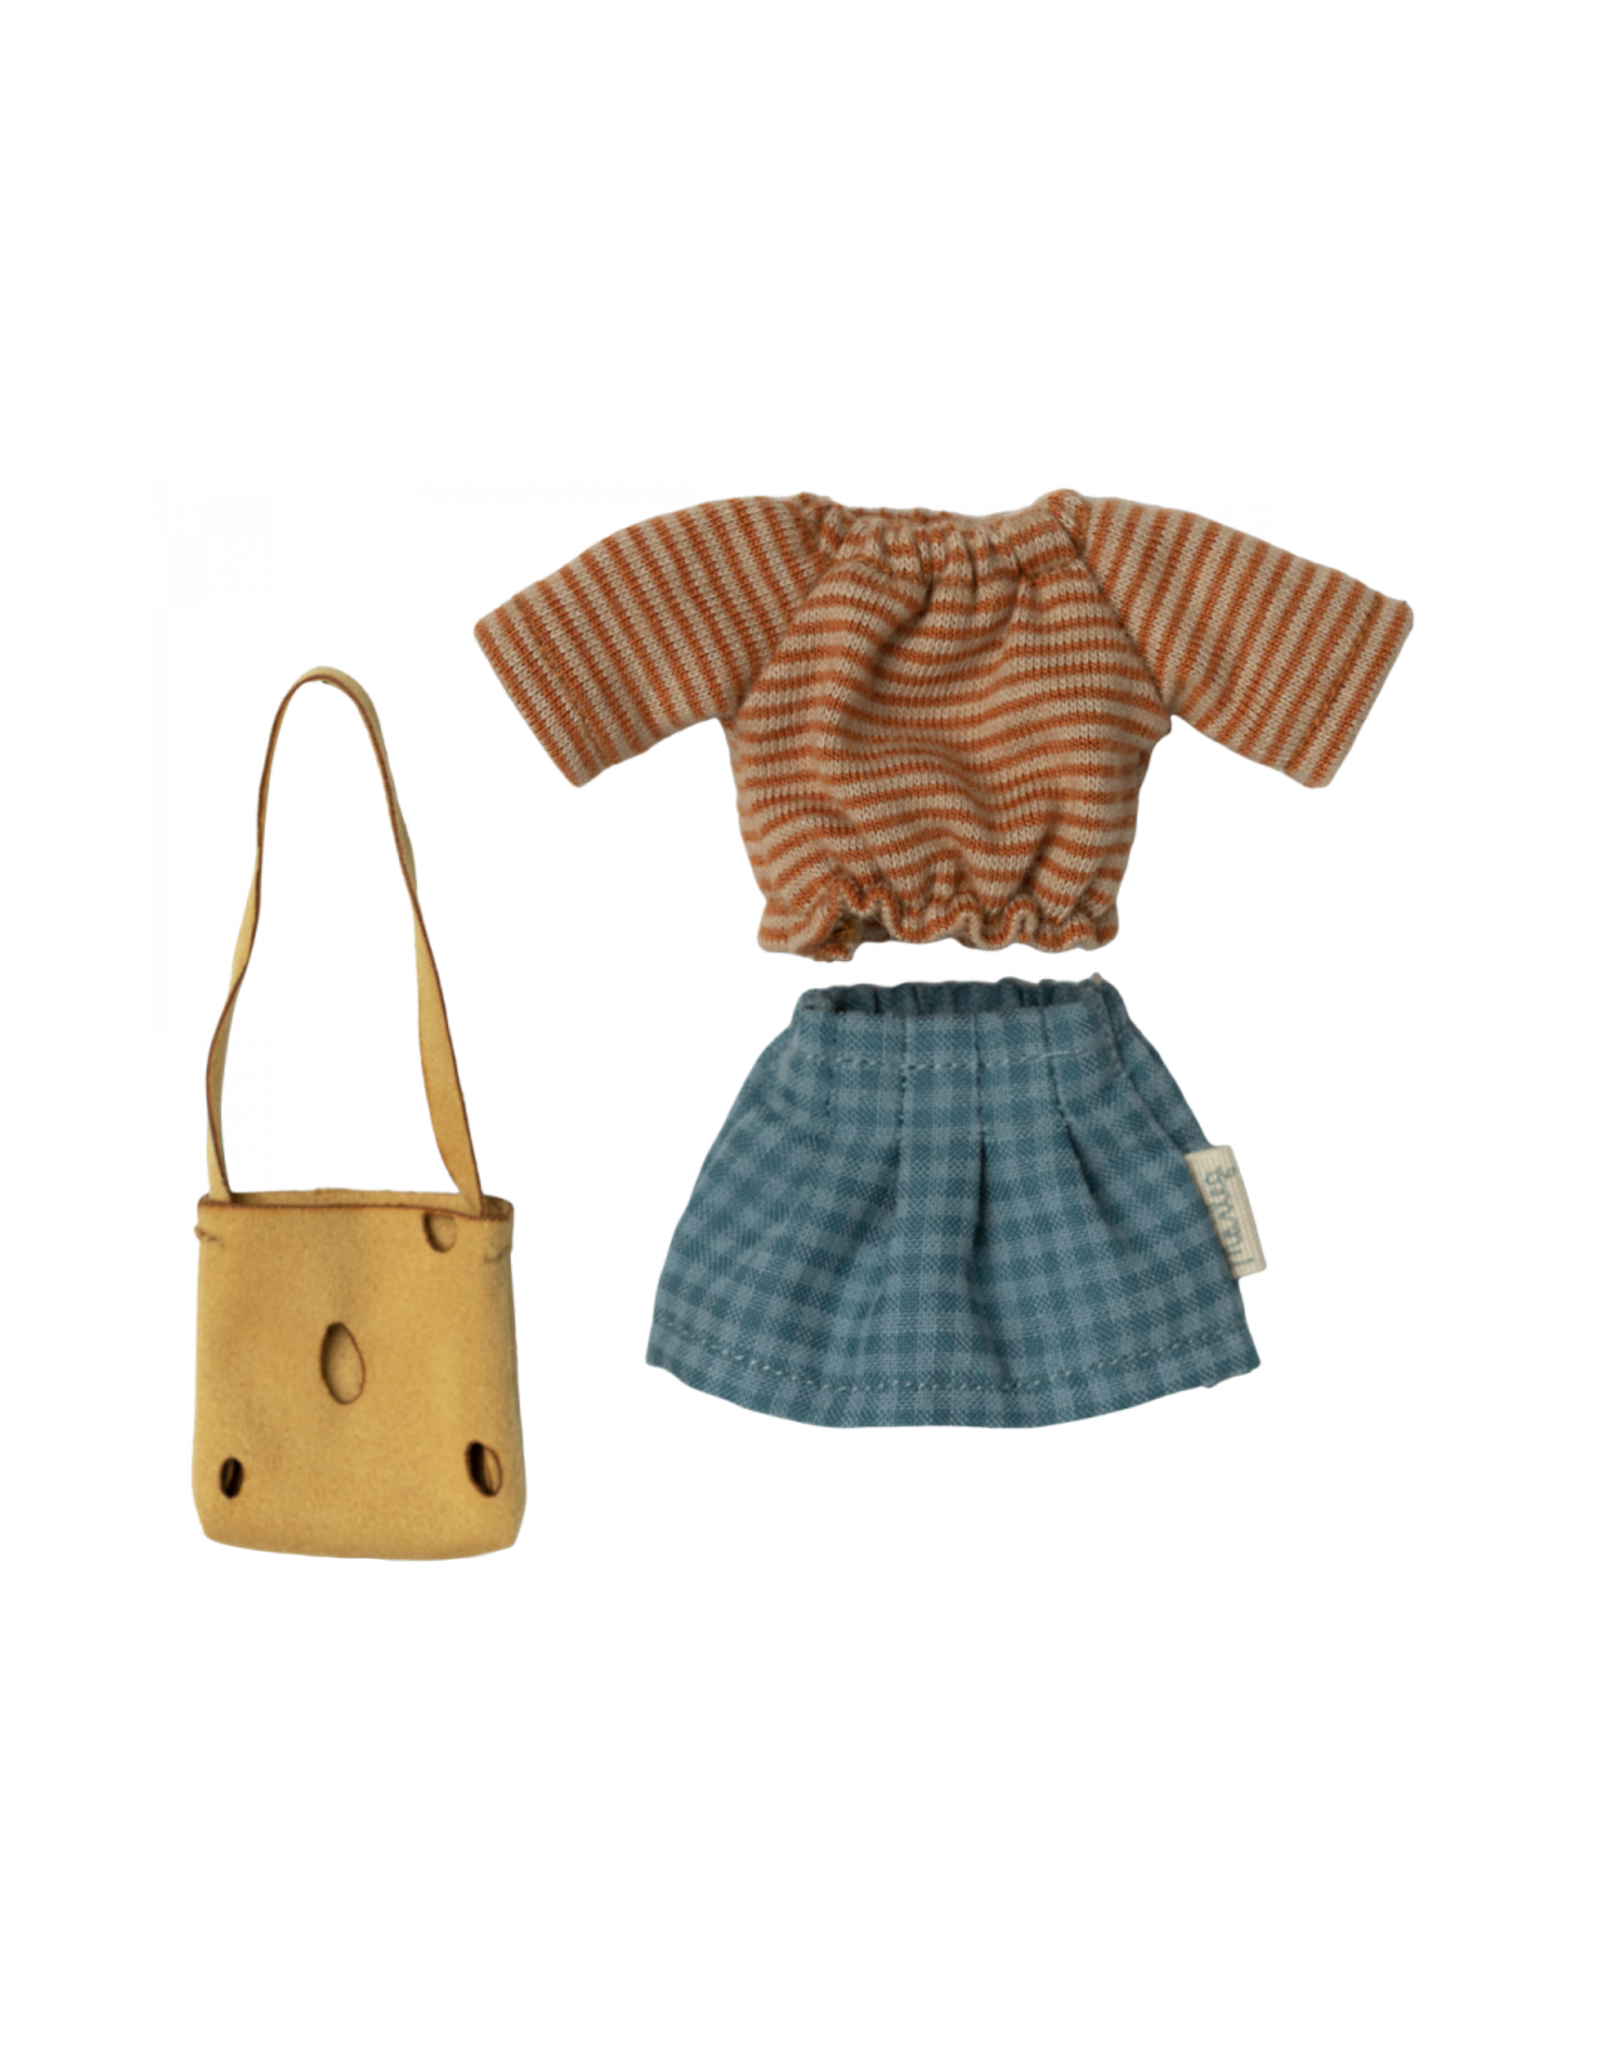 Maileg Mum Mouse - Striped Top + Teal Plaid Skirt